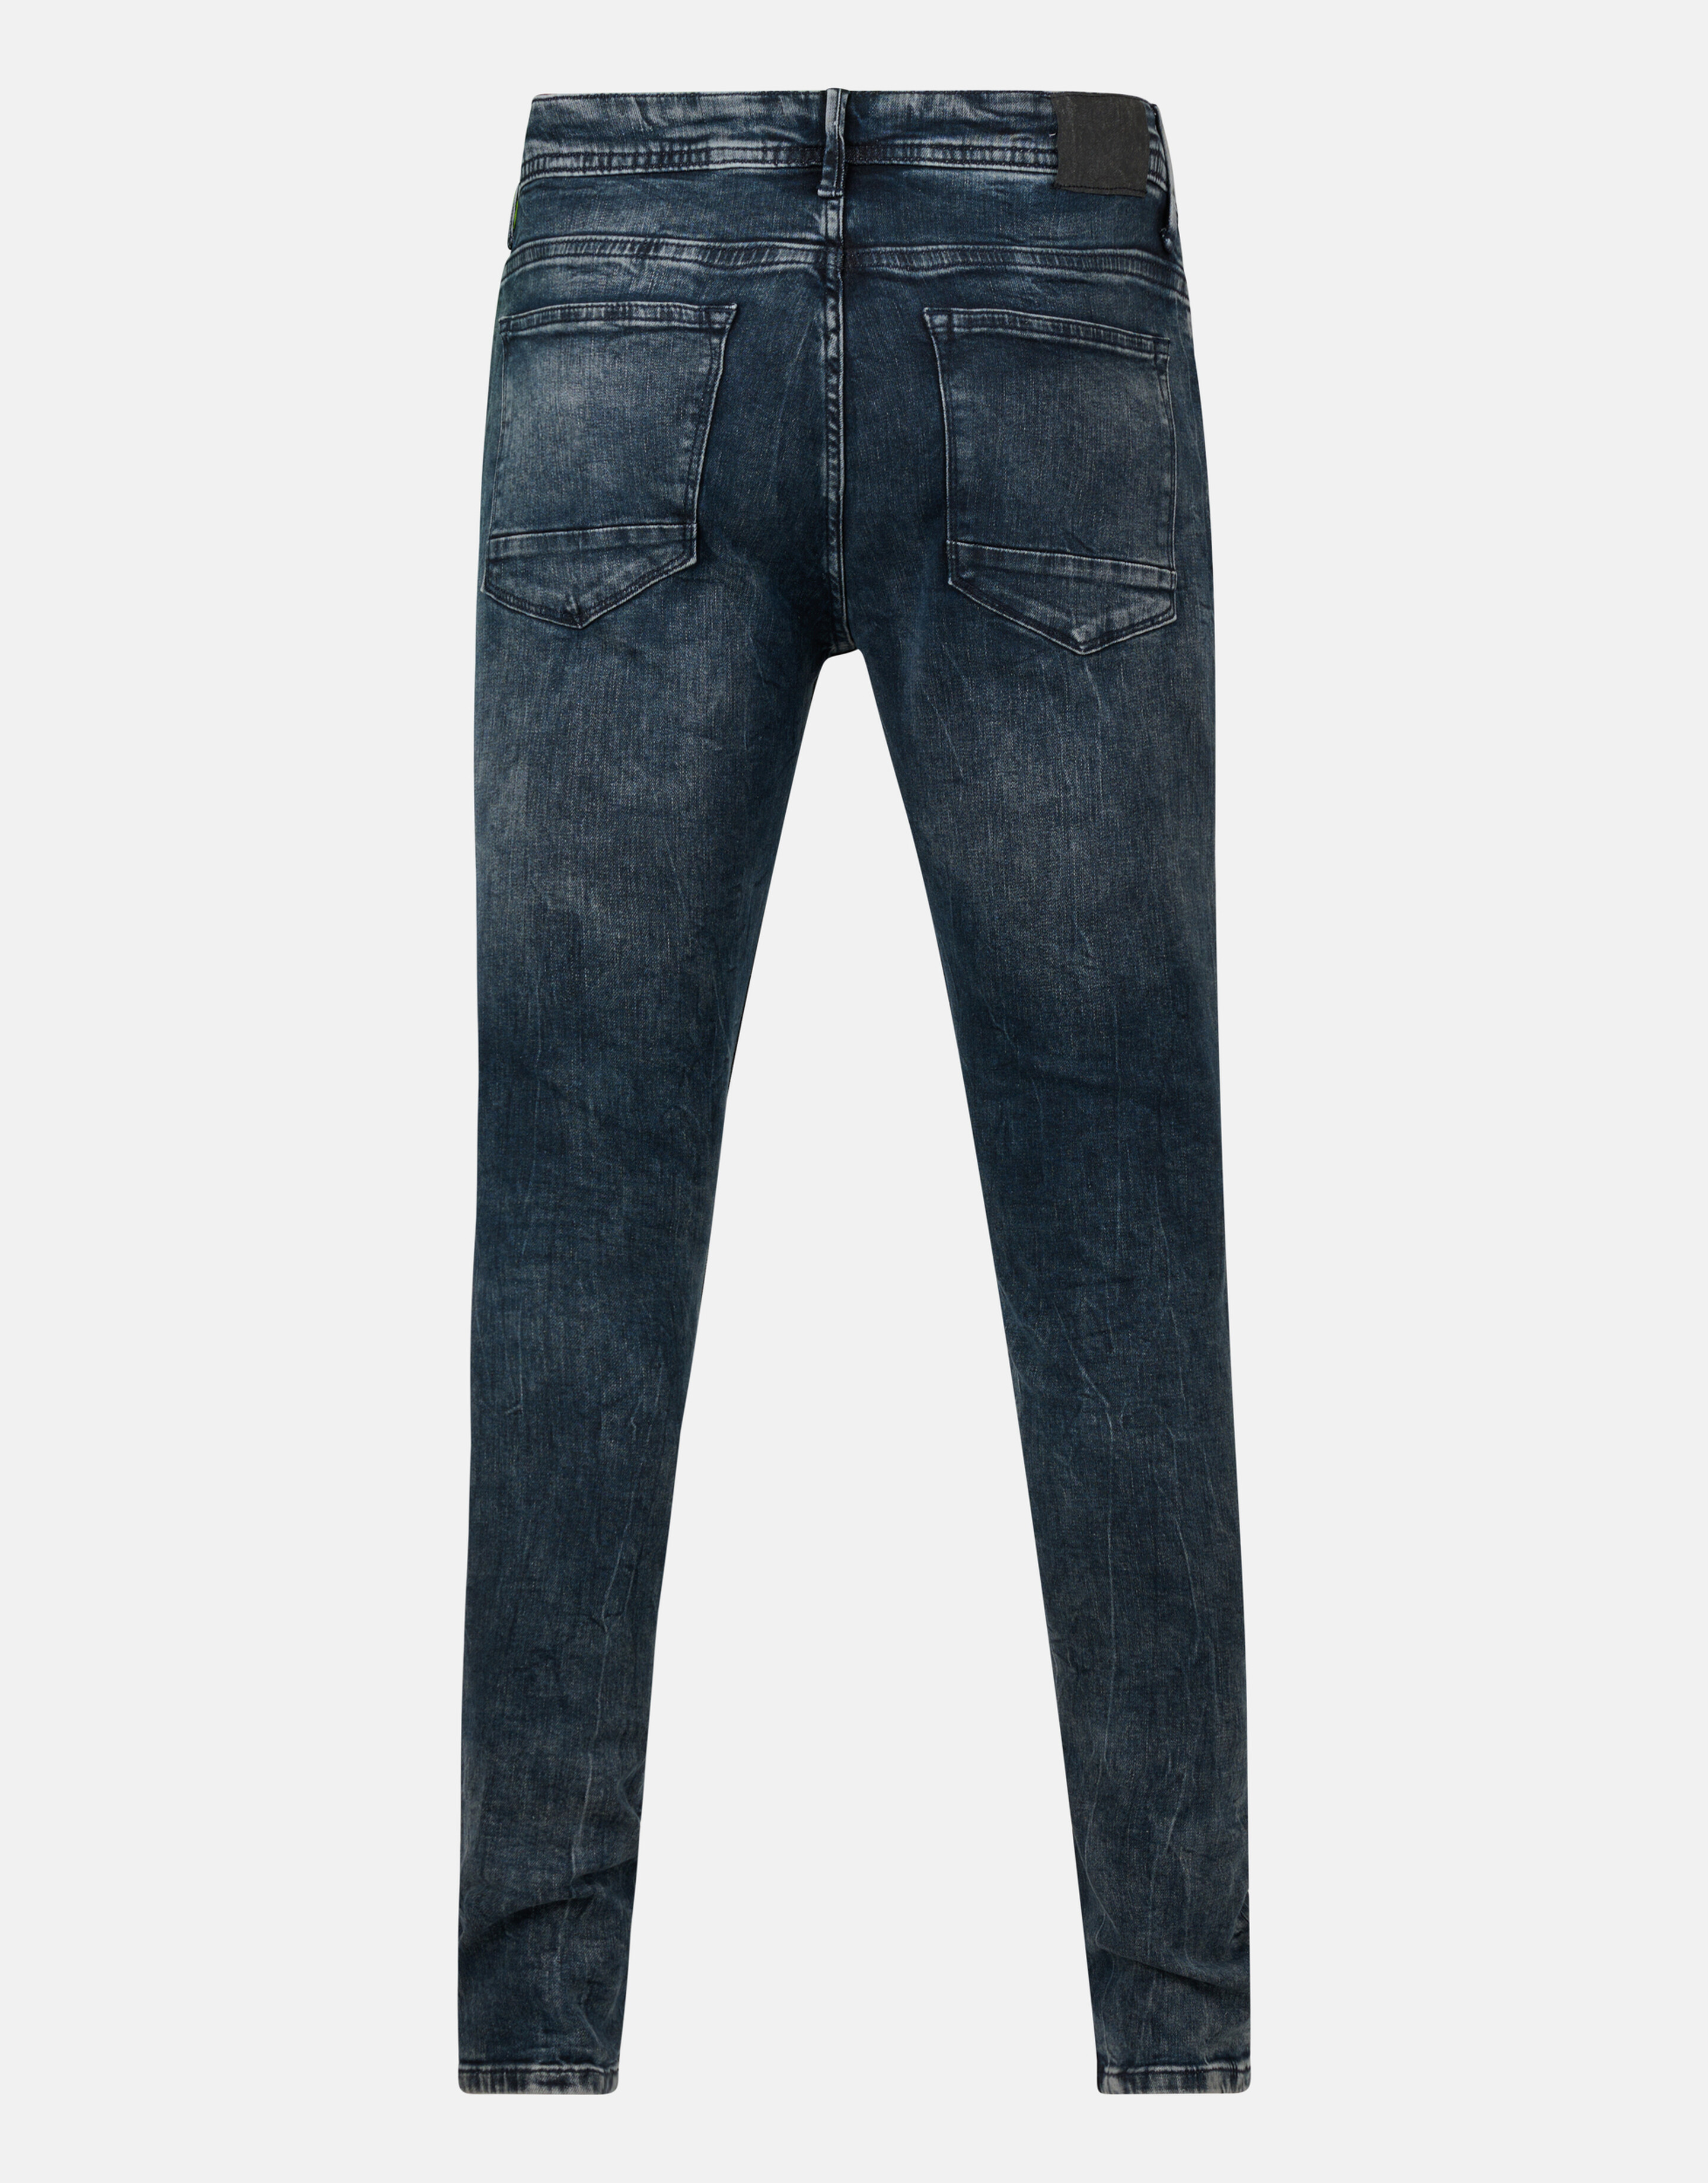 Skinny Jeans Blau/Grau Länge 32 SHOEBY MEN